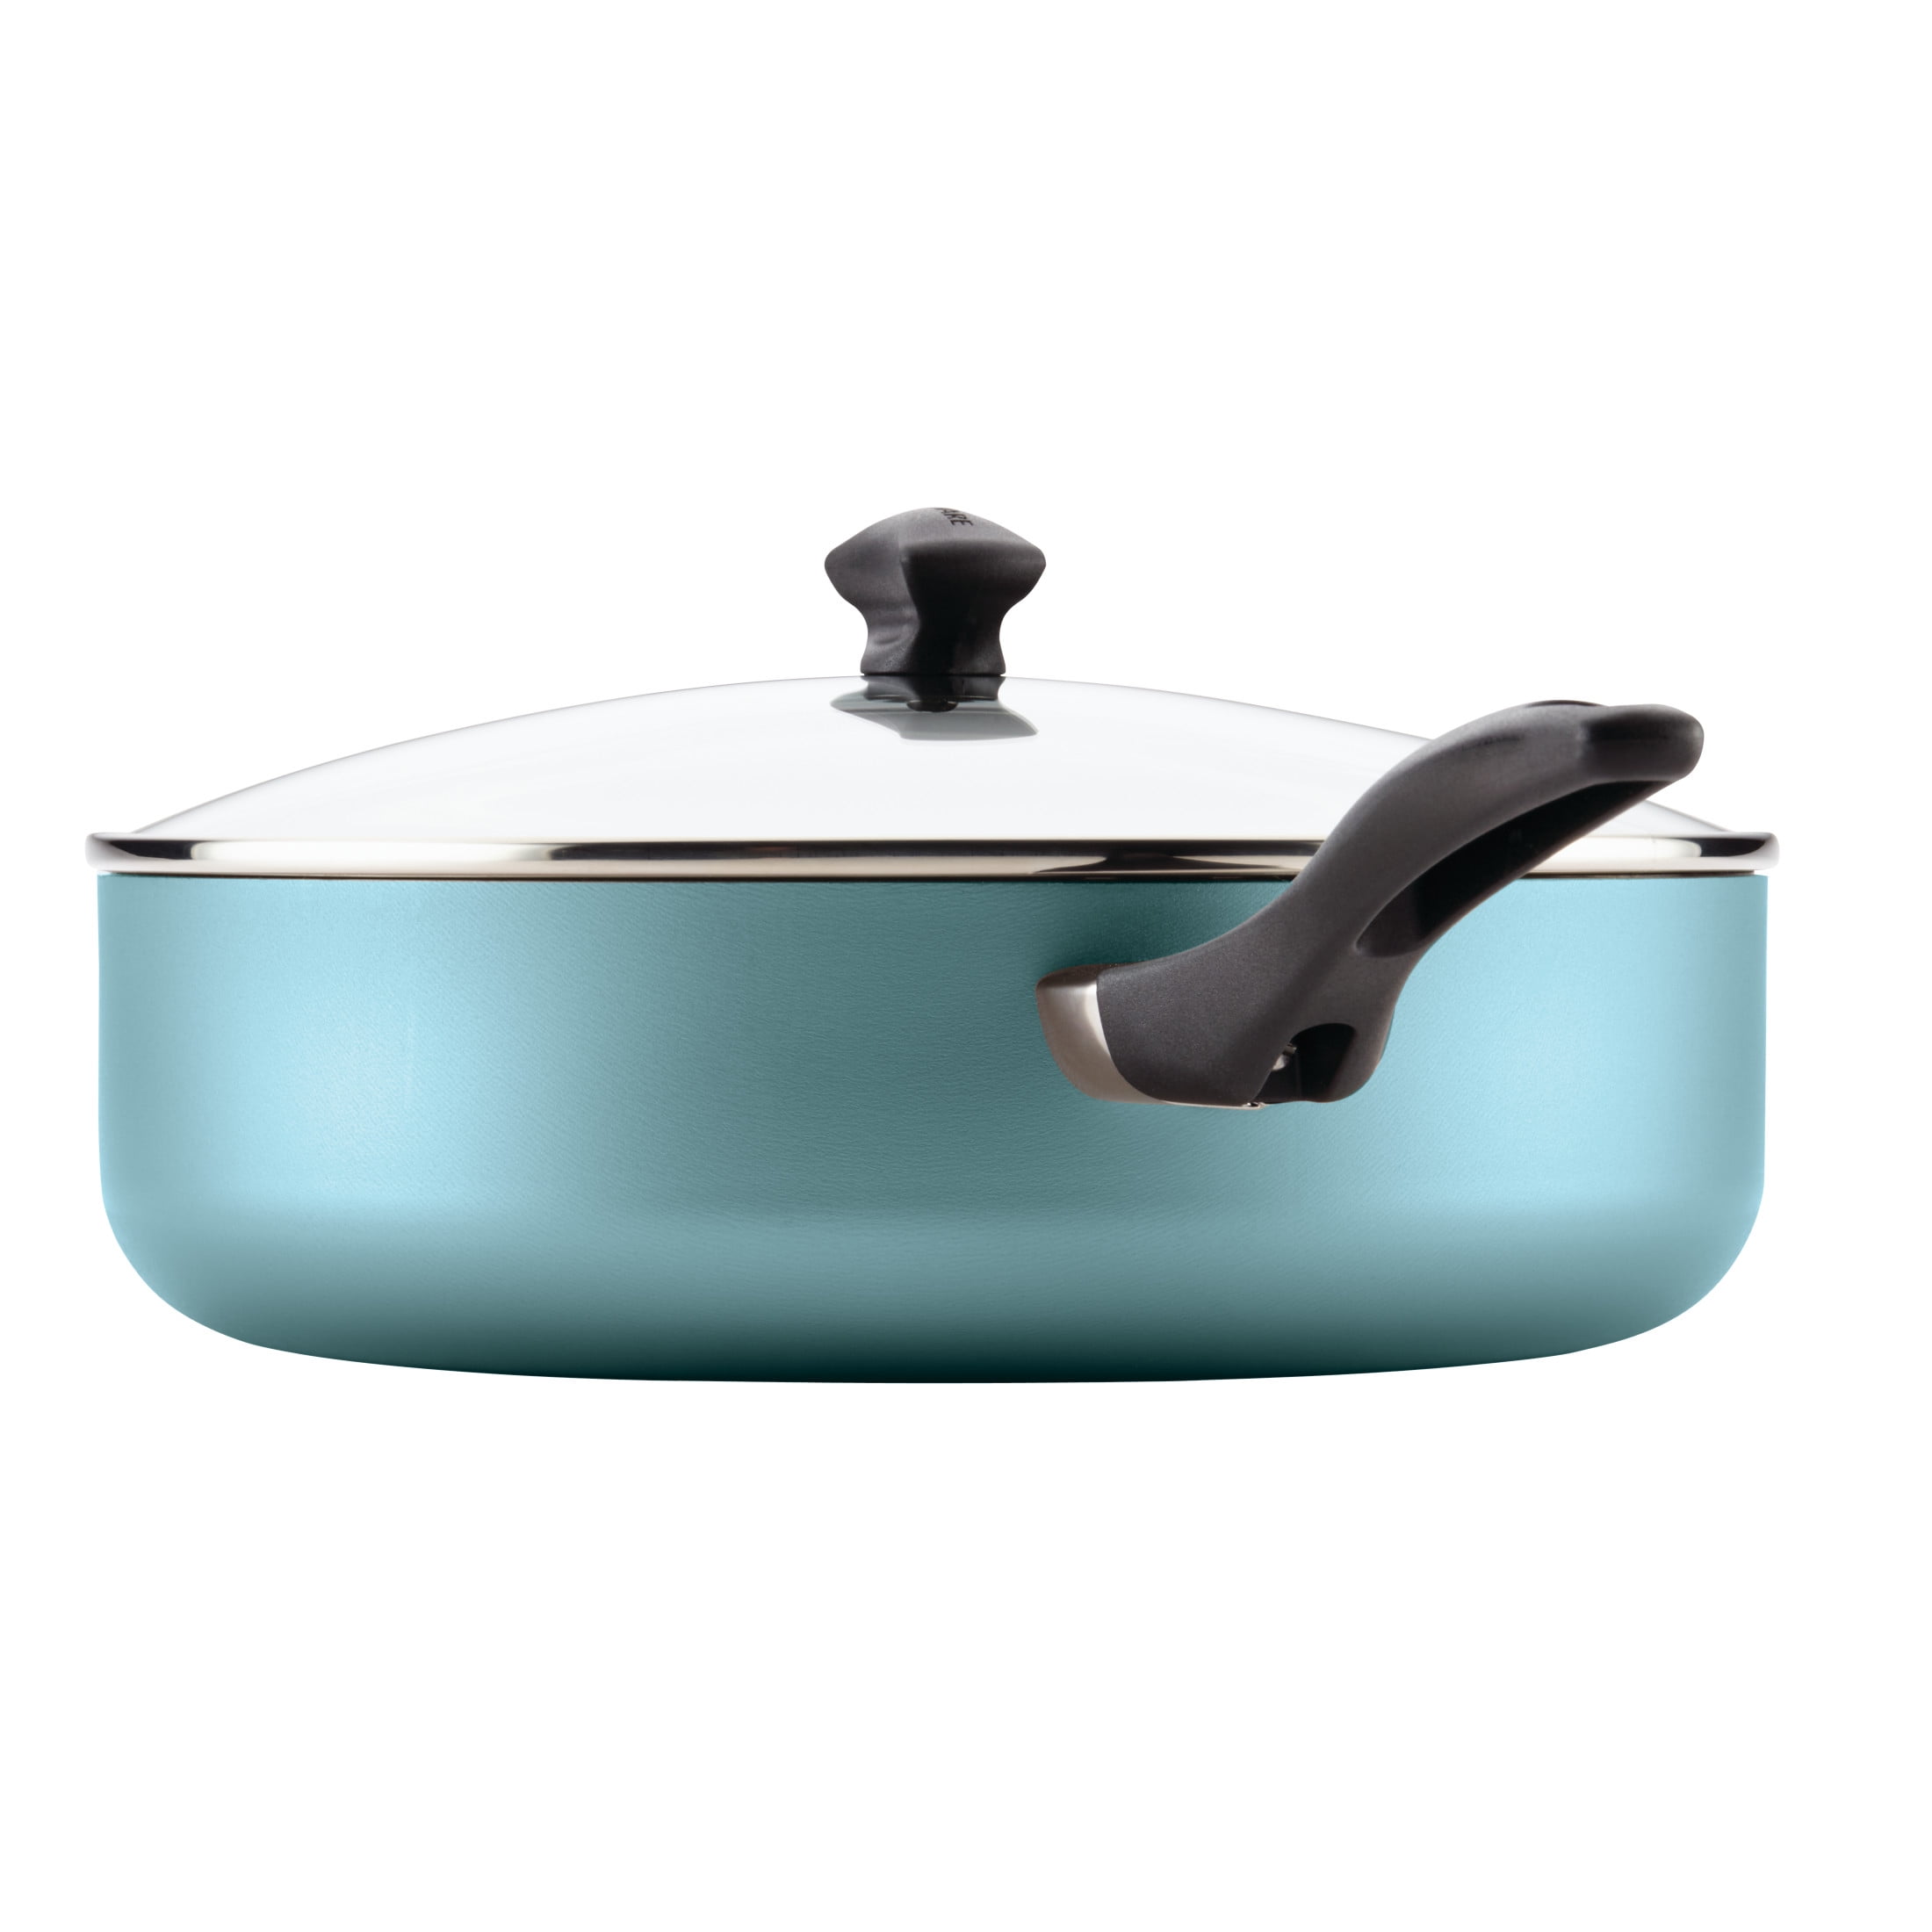  Farberware Smart Control Nonstick Jumbo Cooker/Saute Pan with  Lid and Helper Handle, 6 Quart, Black : Home & Kitchen